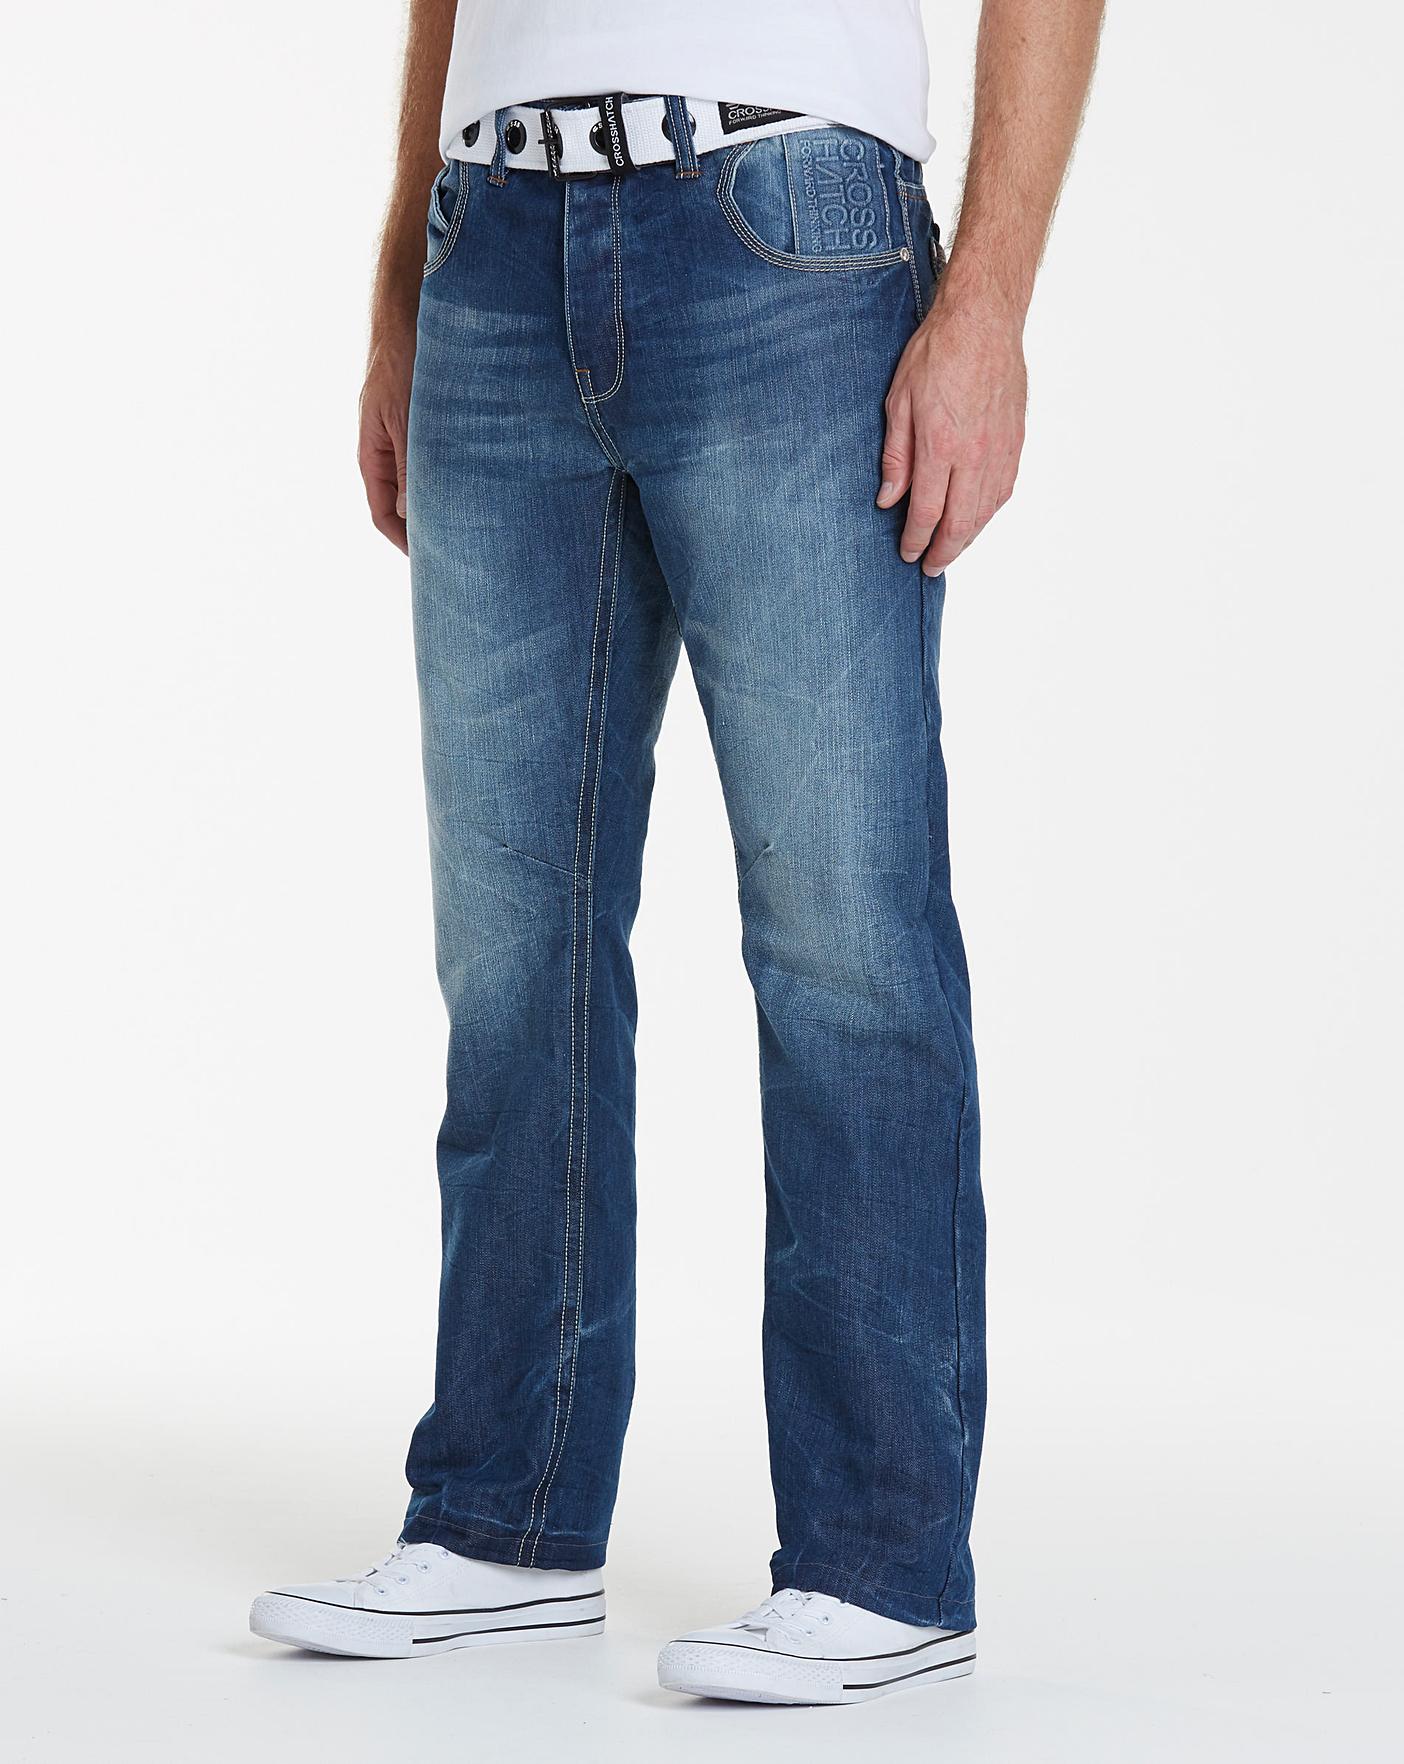 crosshatch jeans